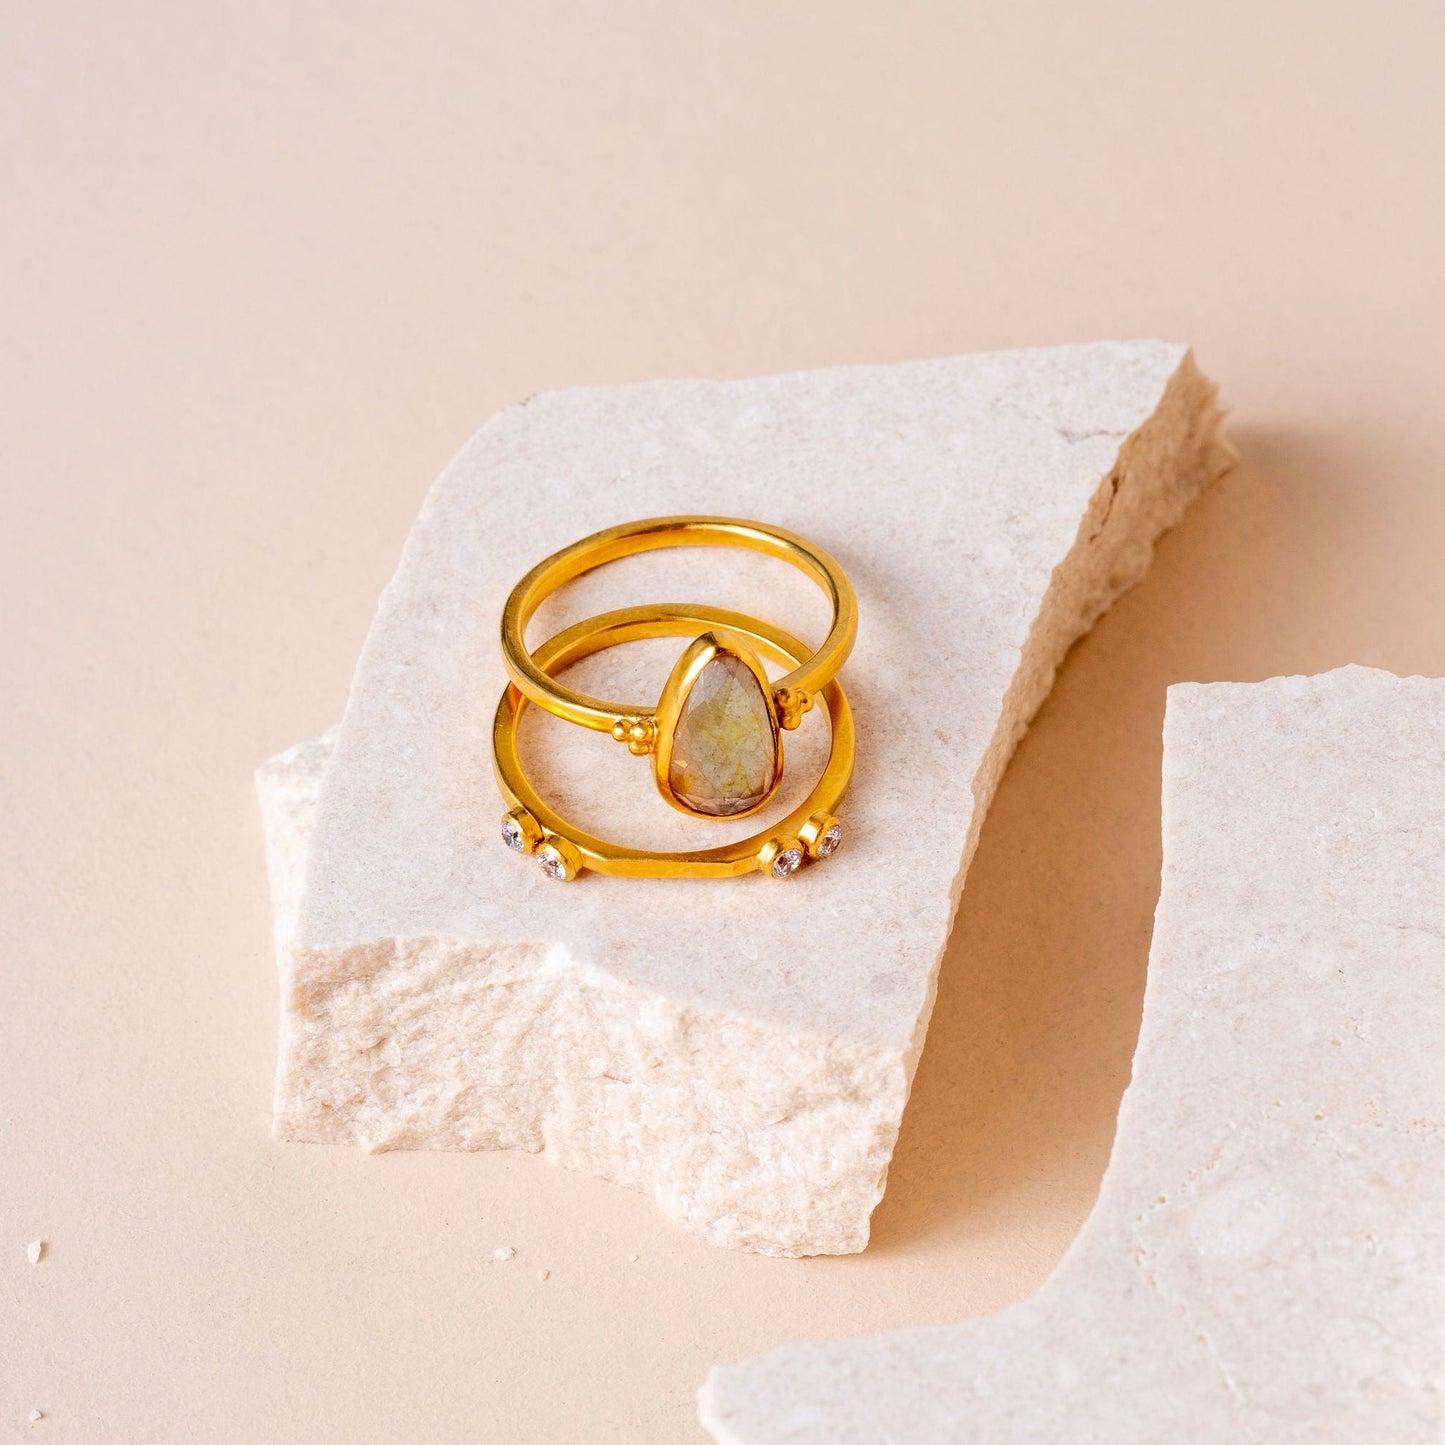 Artisan ring design with meticulous granulation framing a captivating light yellow teardrop sapphire.